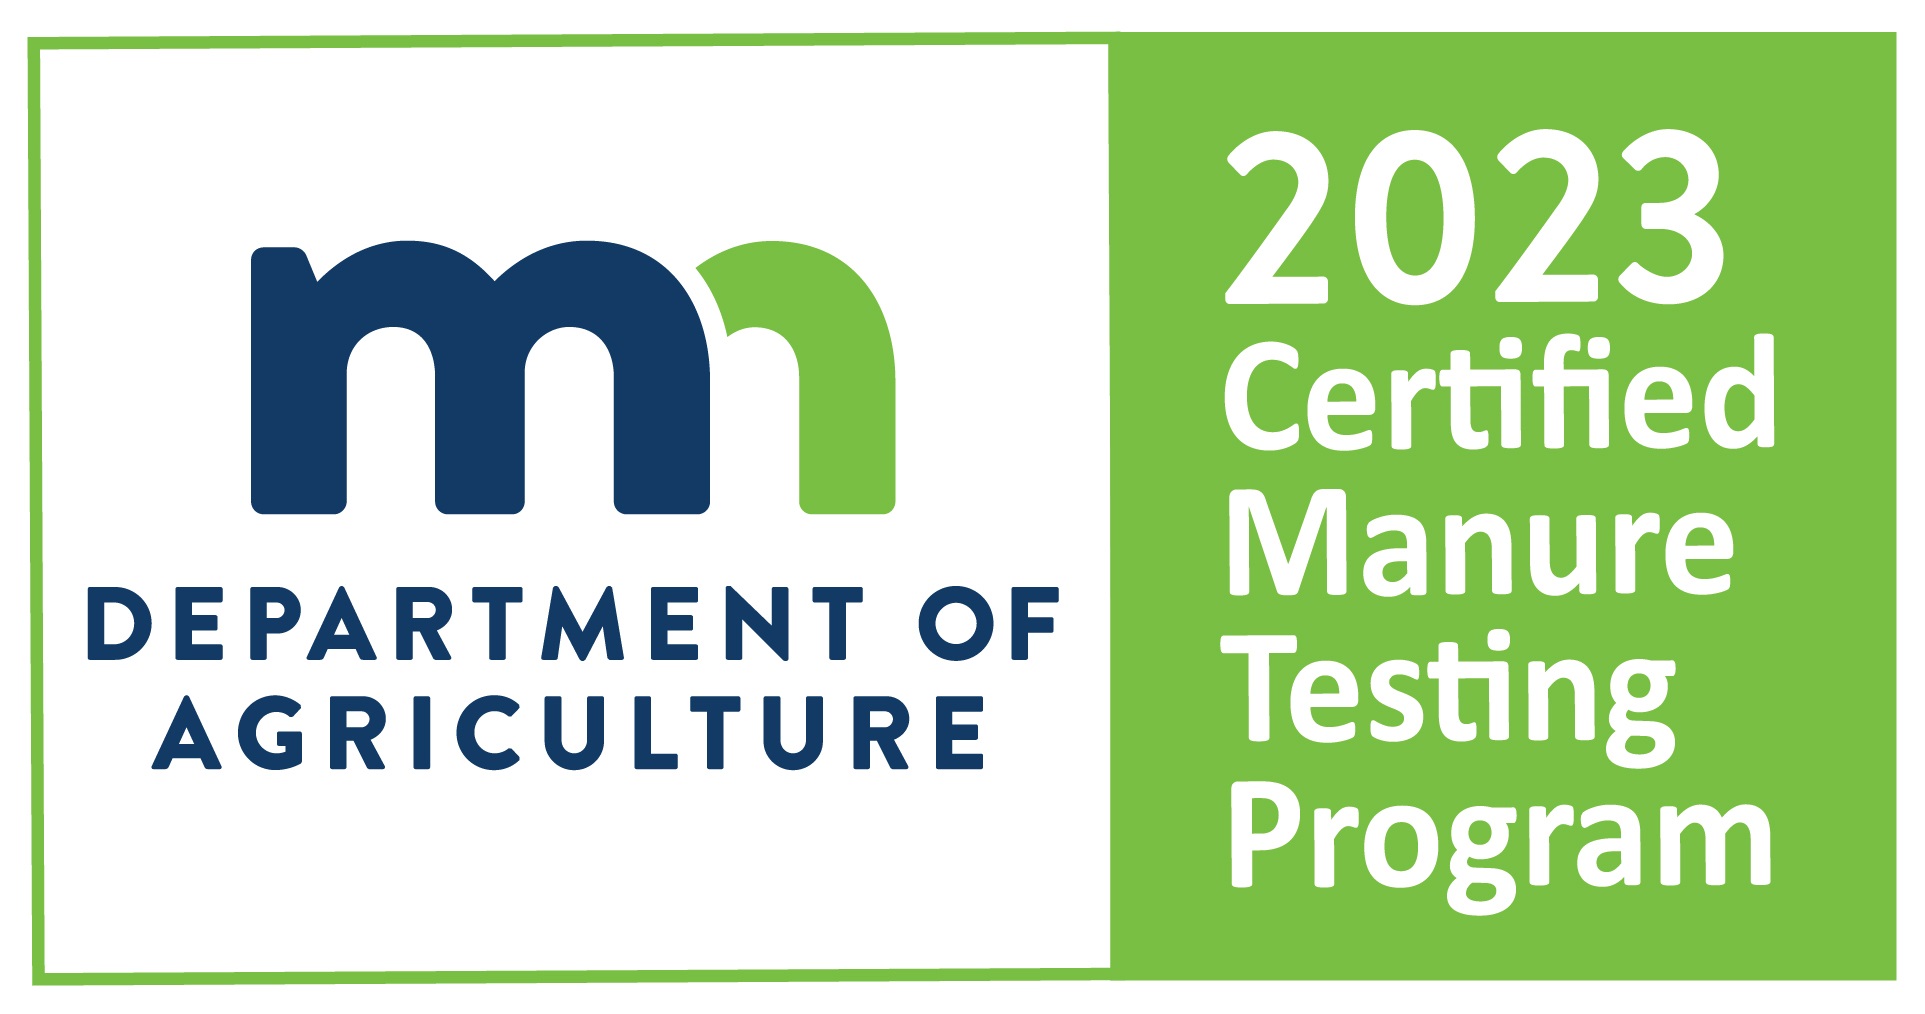 Minnesota Department of Agriculture 2023 Certified Manure Testing Program Logo